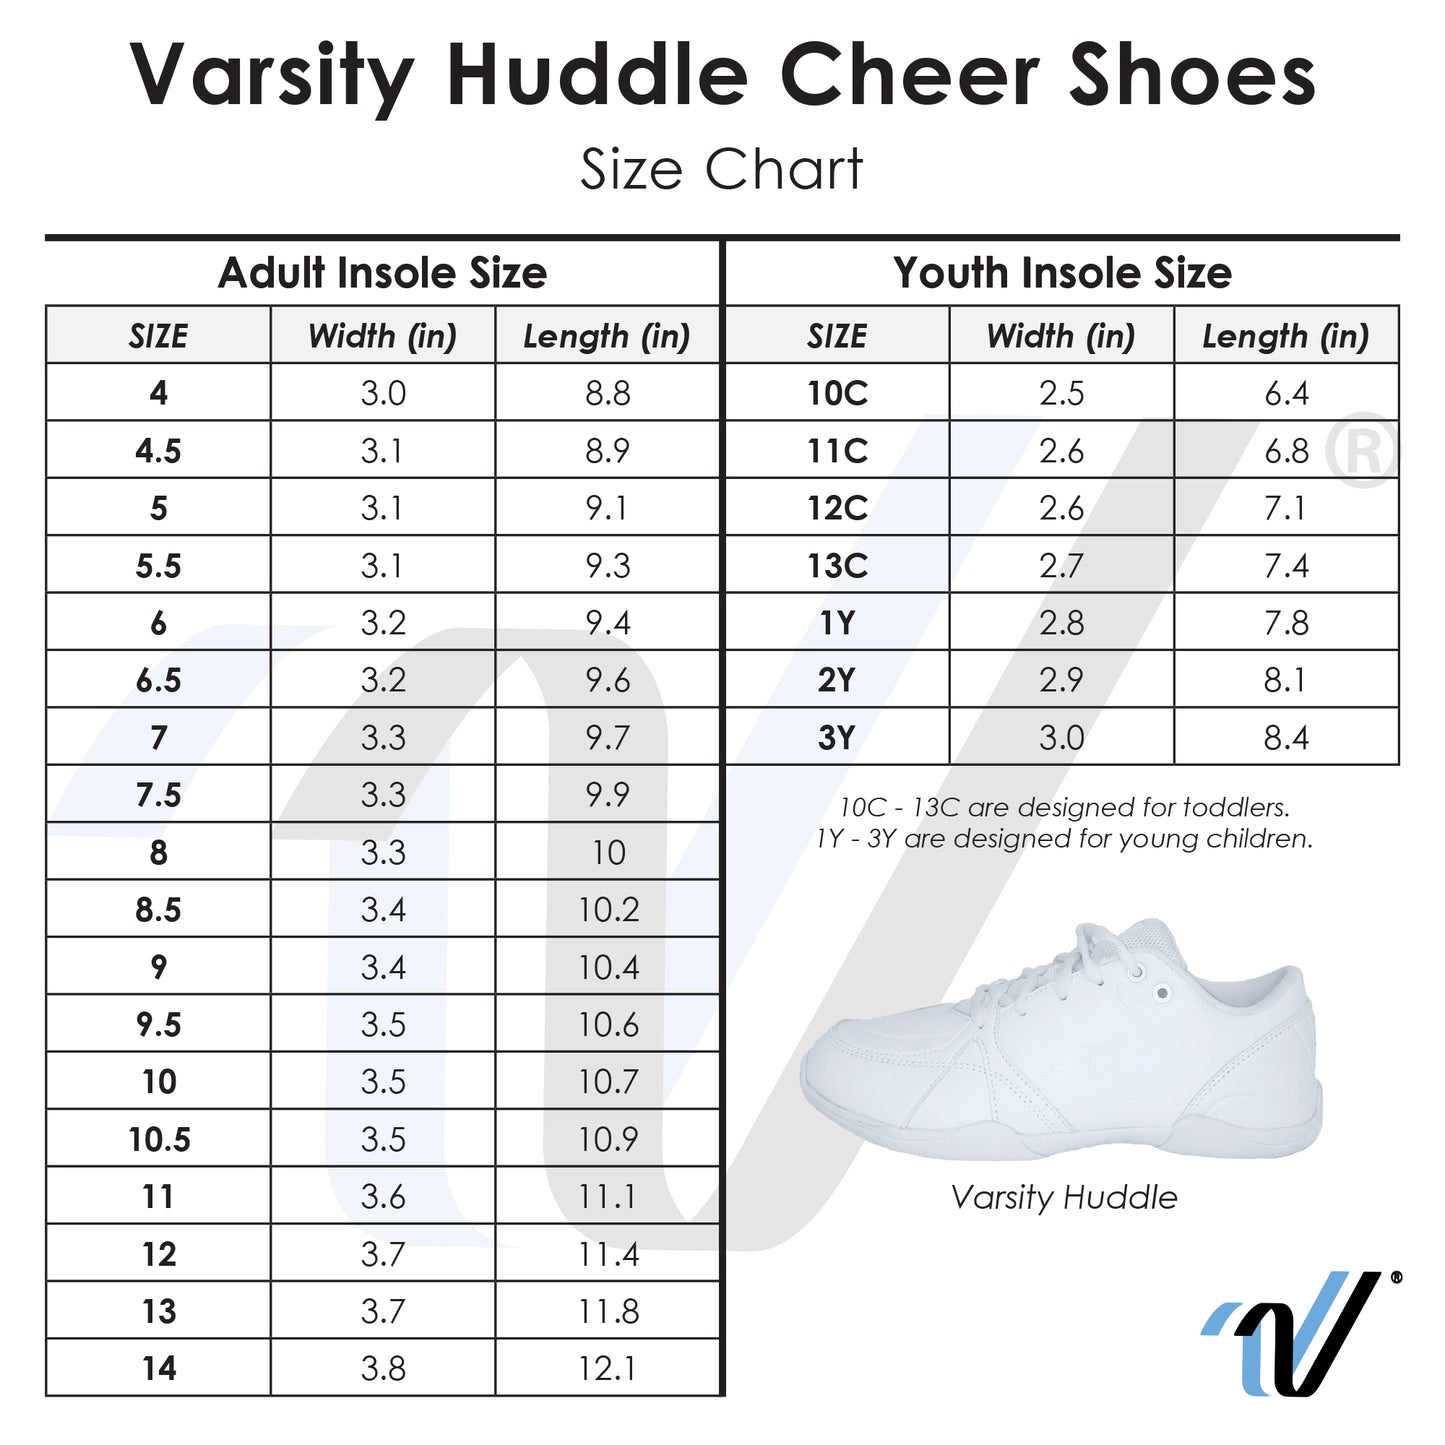 Varsity Huddle Cheer Shoes